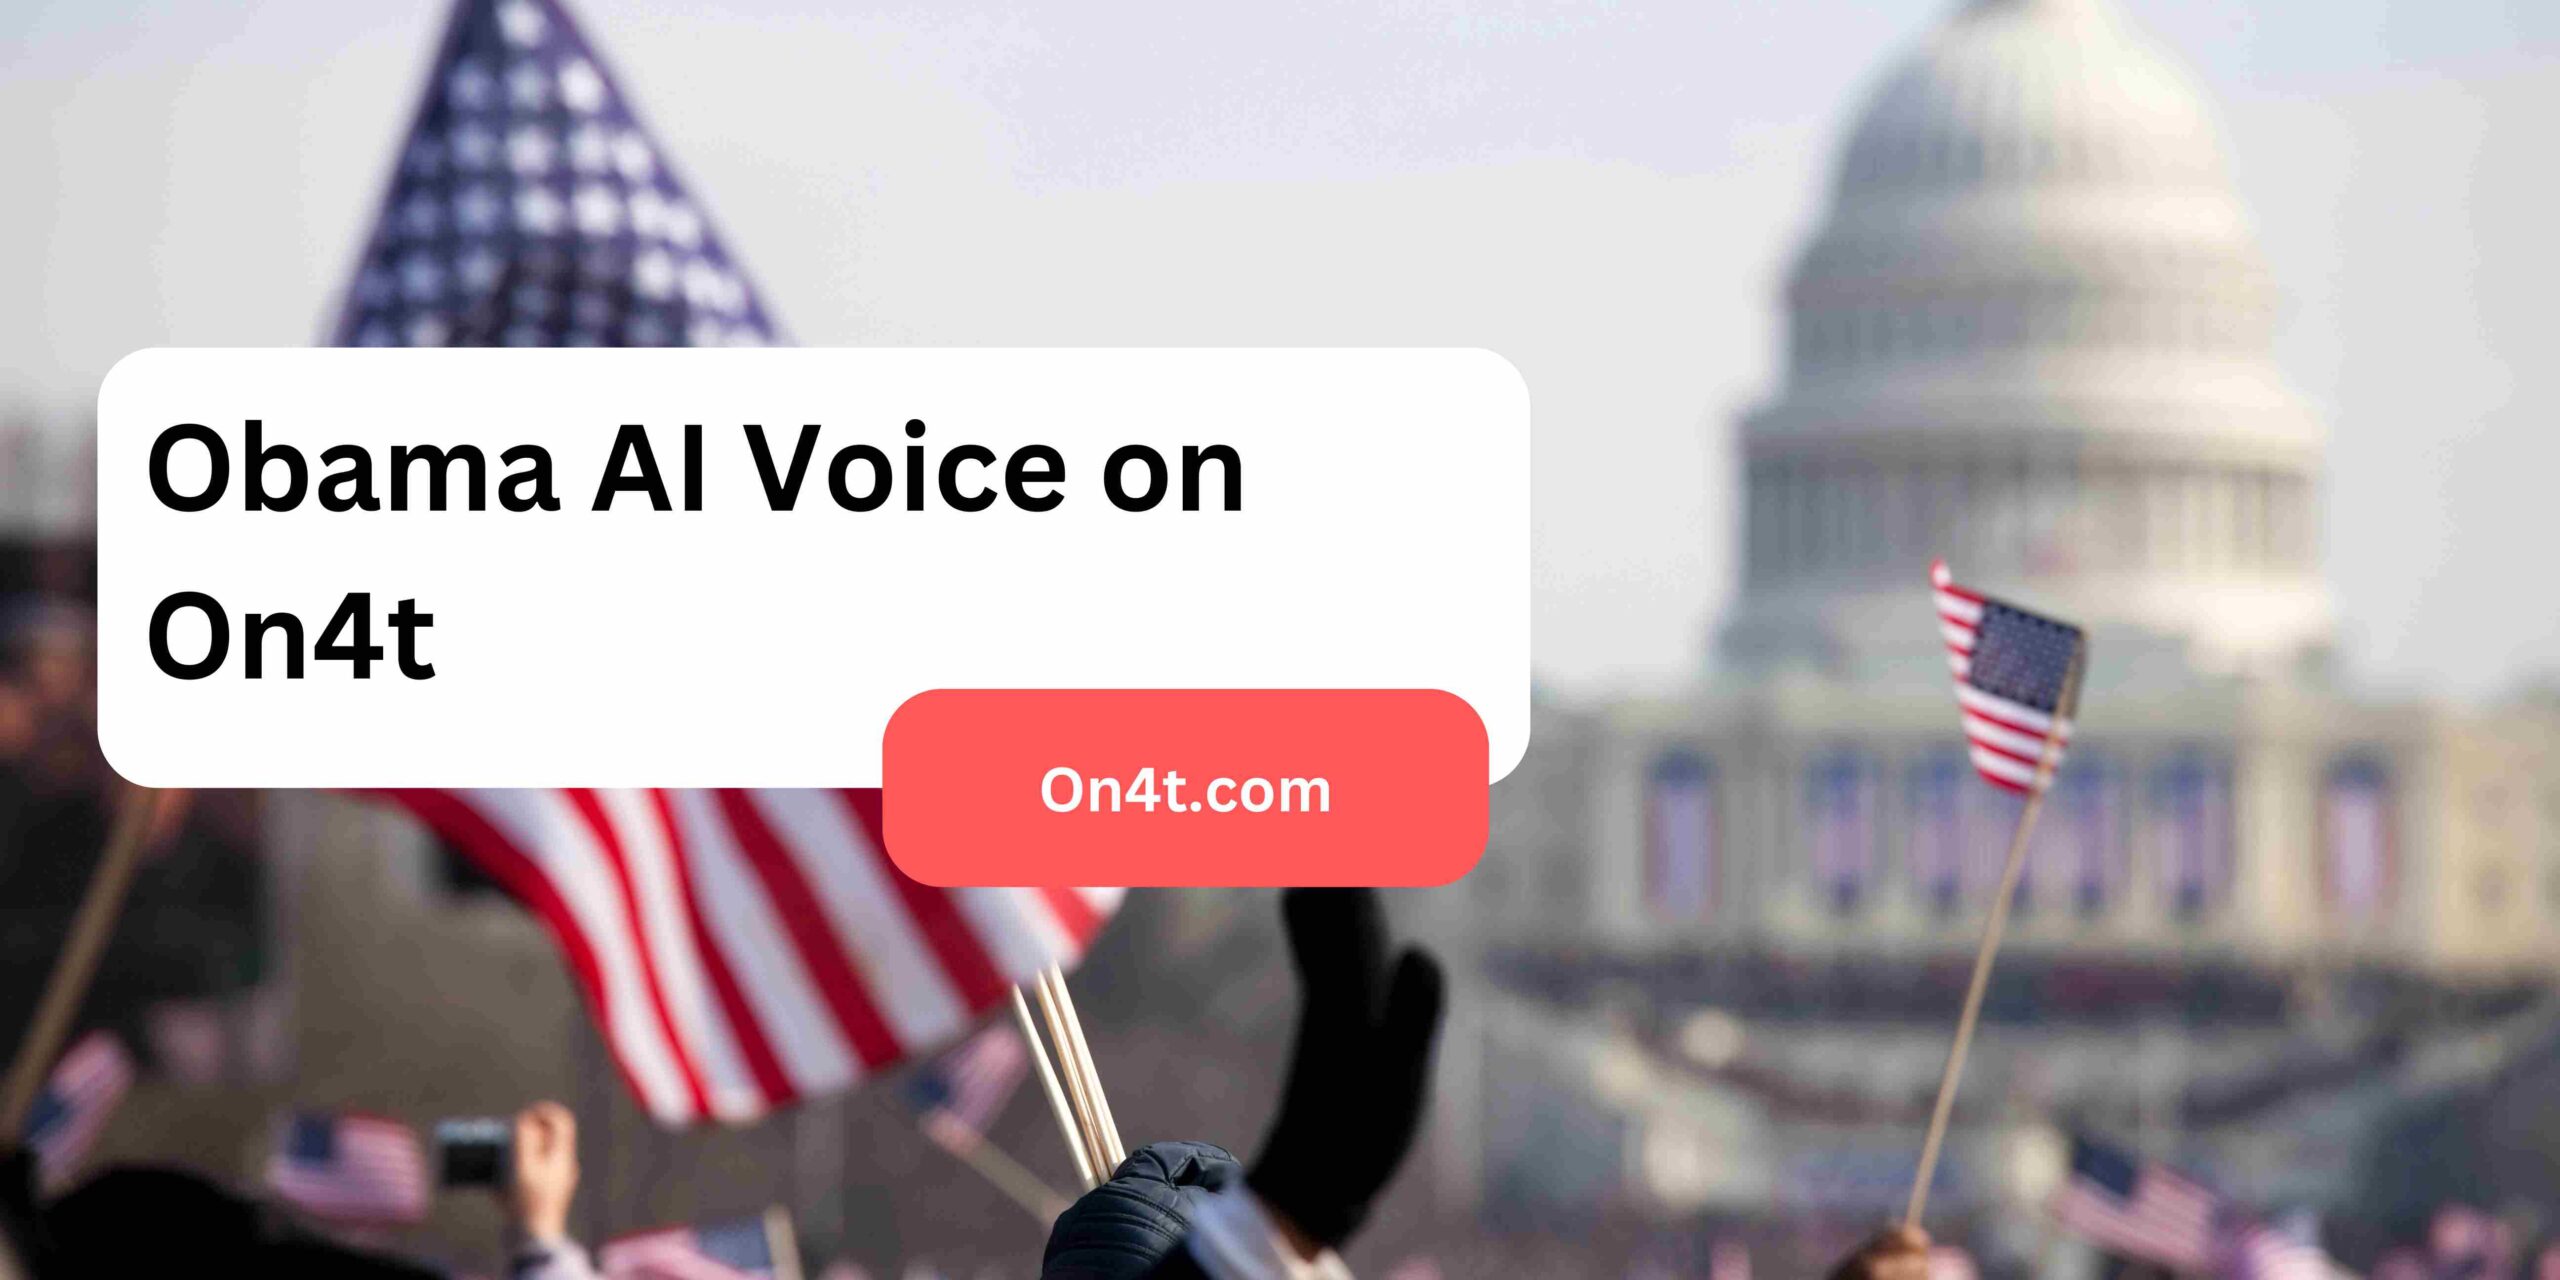 Obama AI Voice on On4t